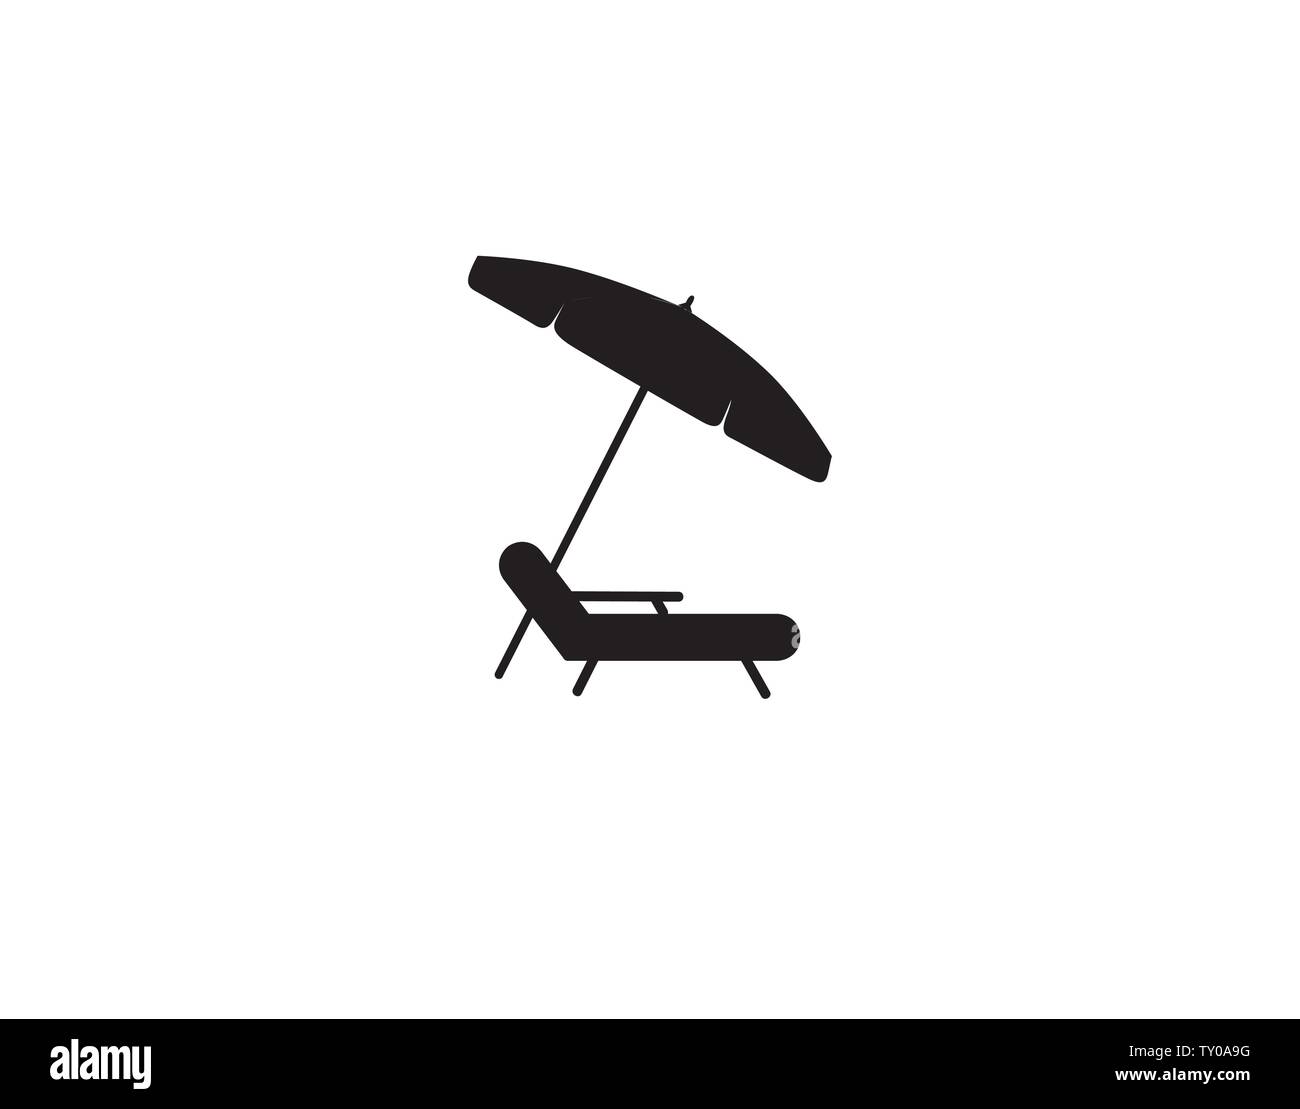 Deckchair umbrella summer beach holiday symbol silhouette. Chaise longue, parasol icon isolated. Sunbath beach resort symbol of the holidays Stock Vector